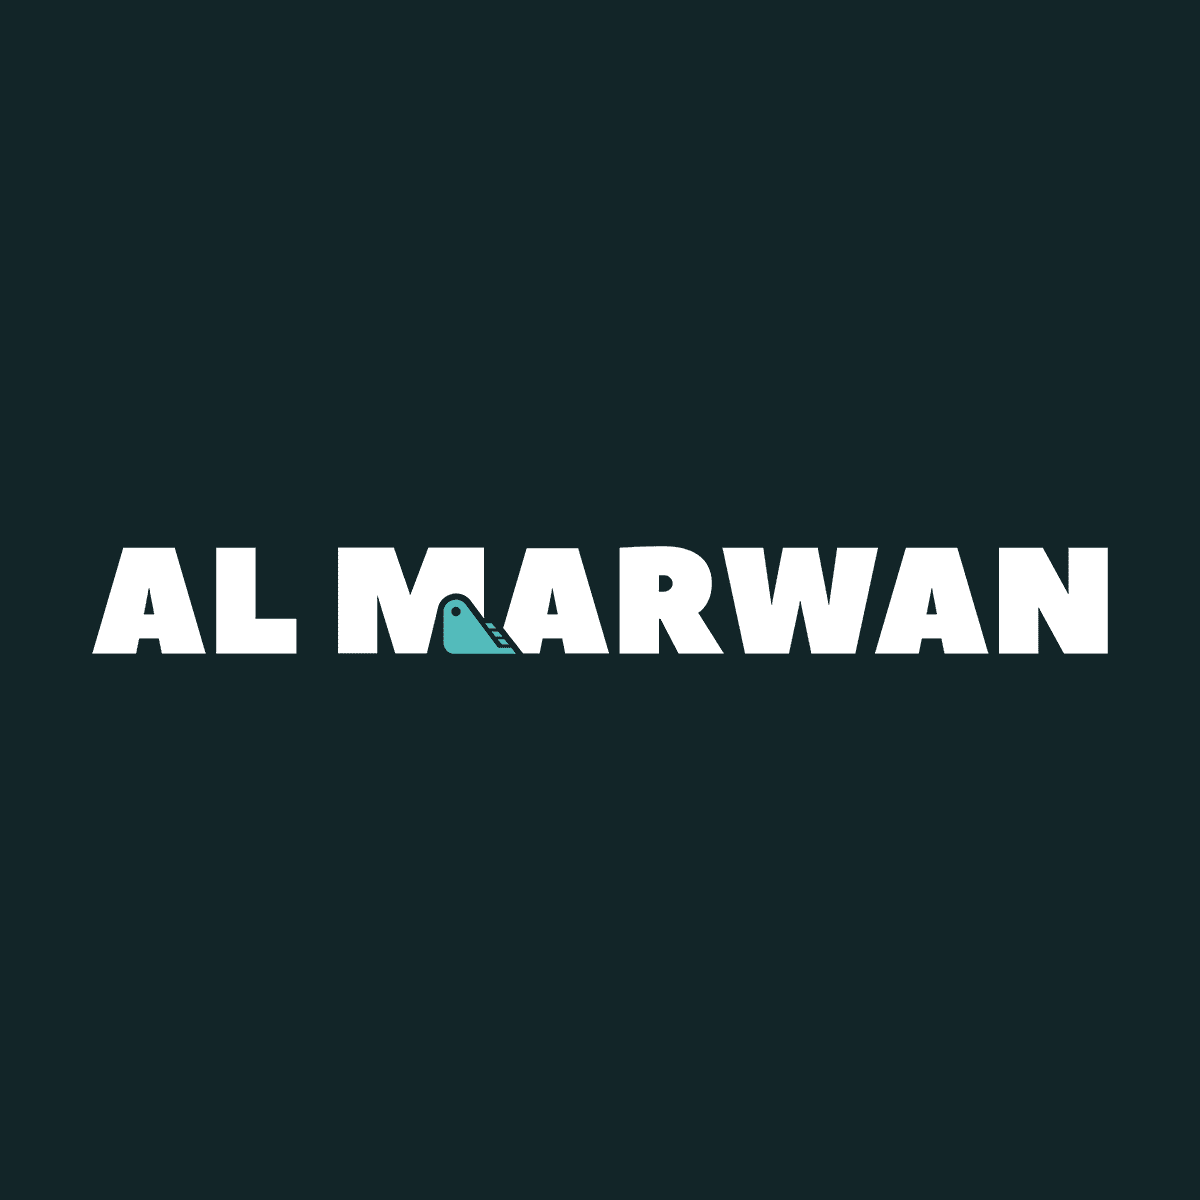 Al Marwan Heavy Machinery'